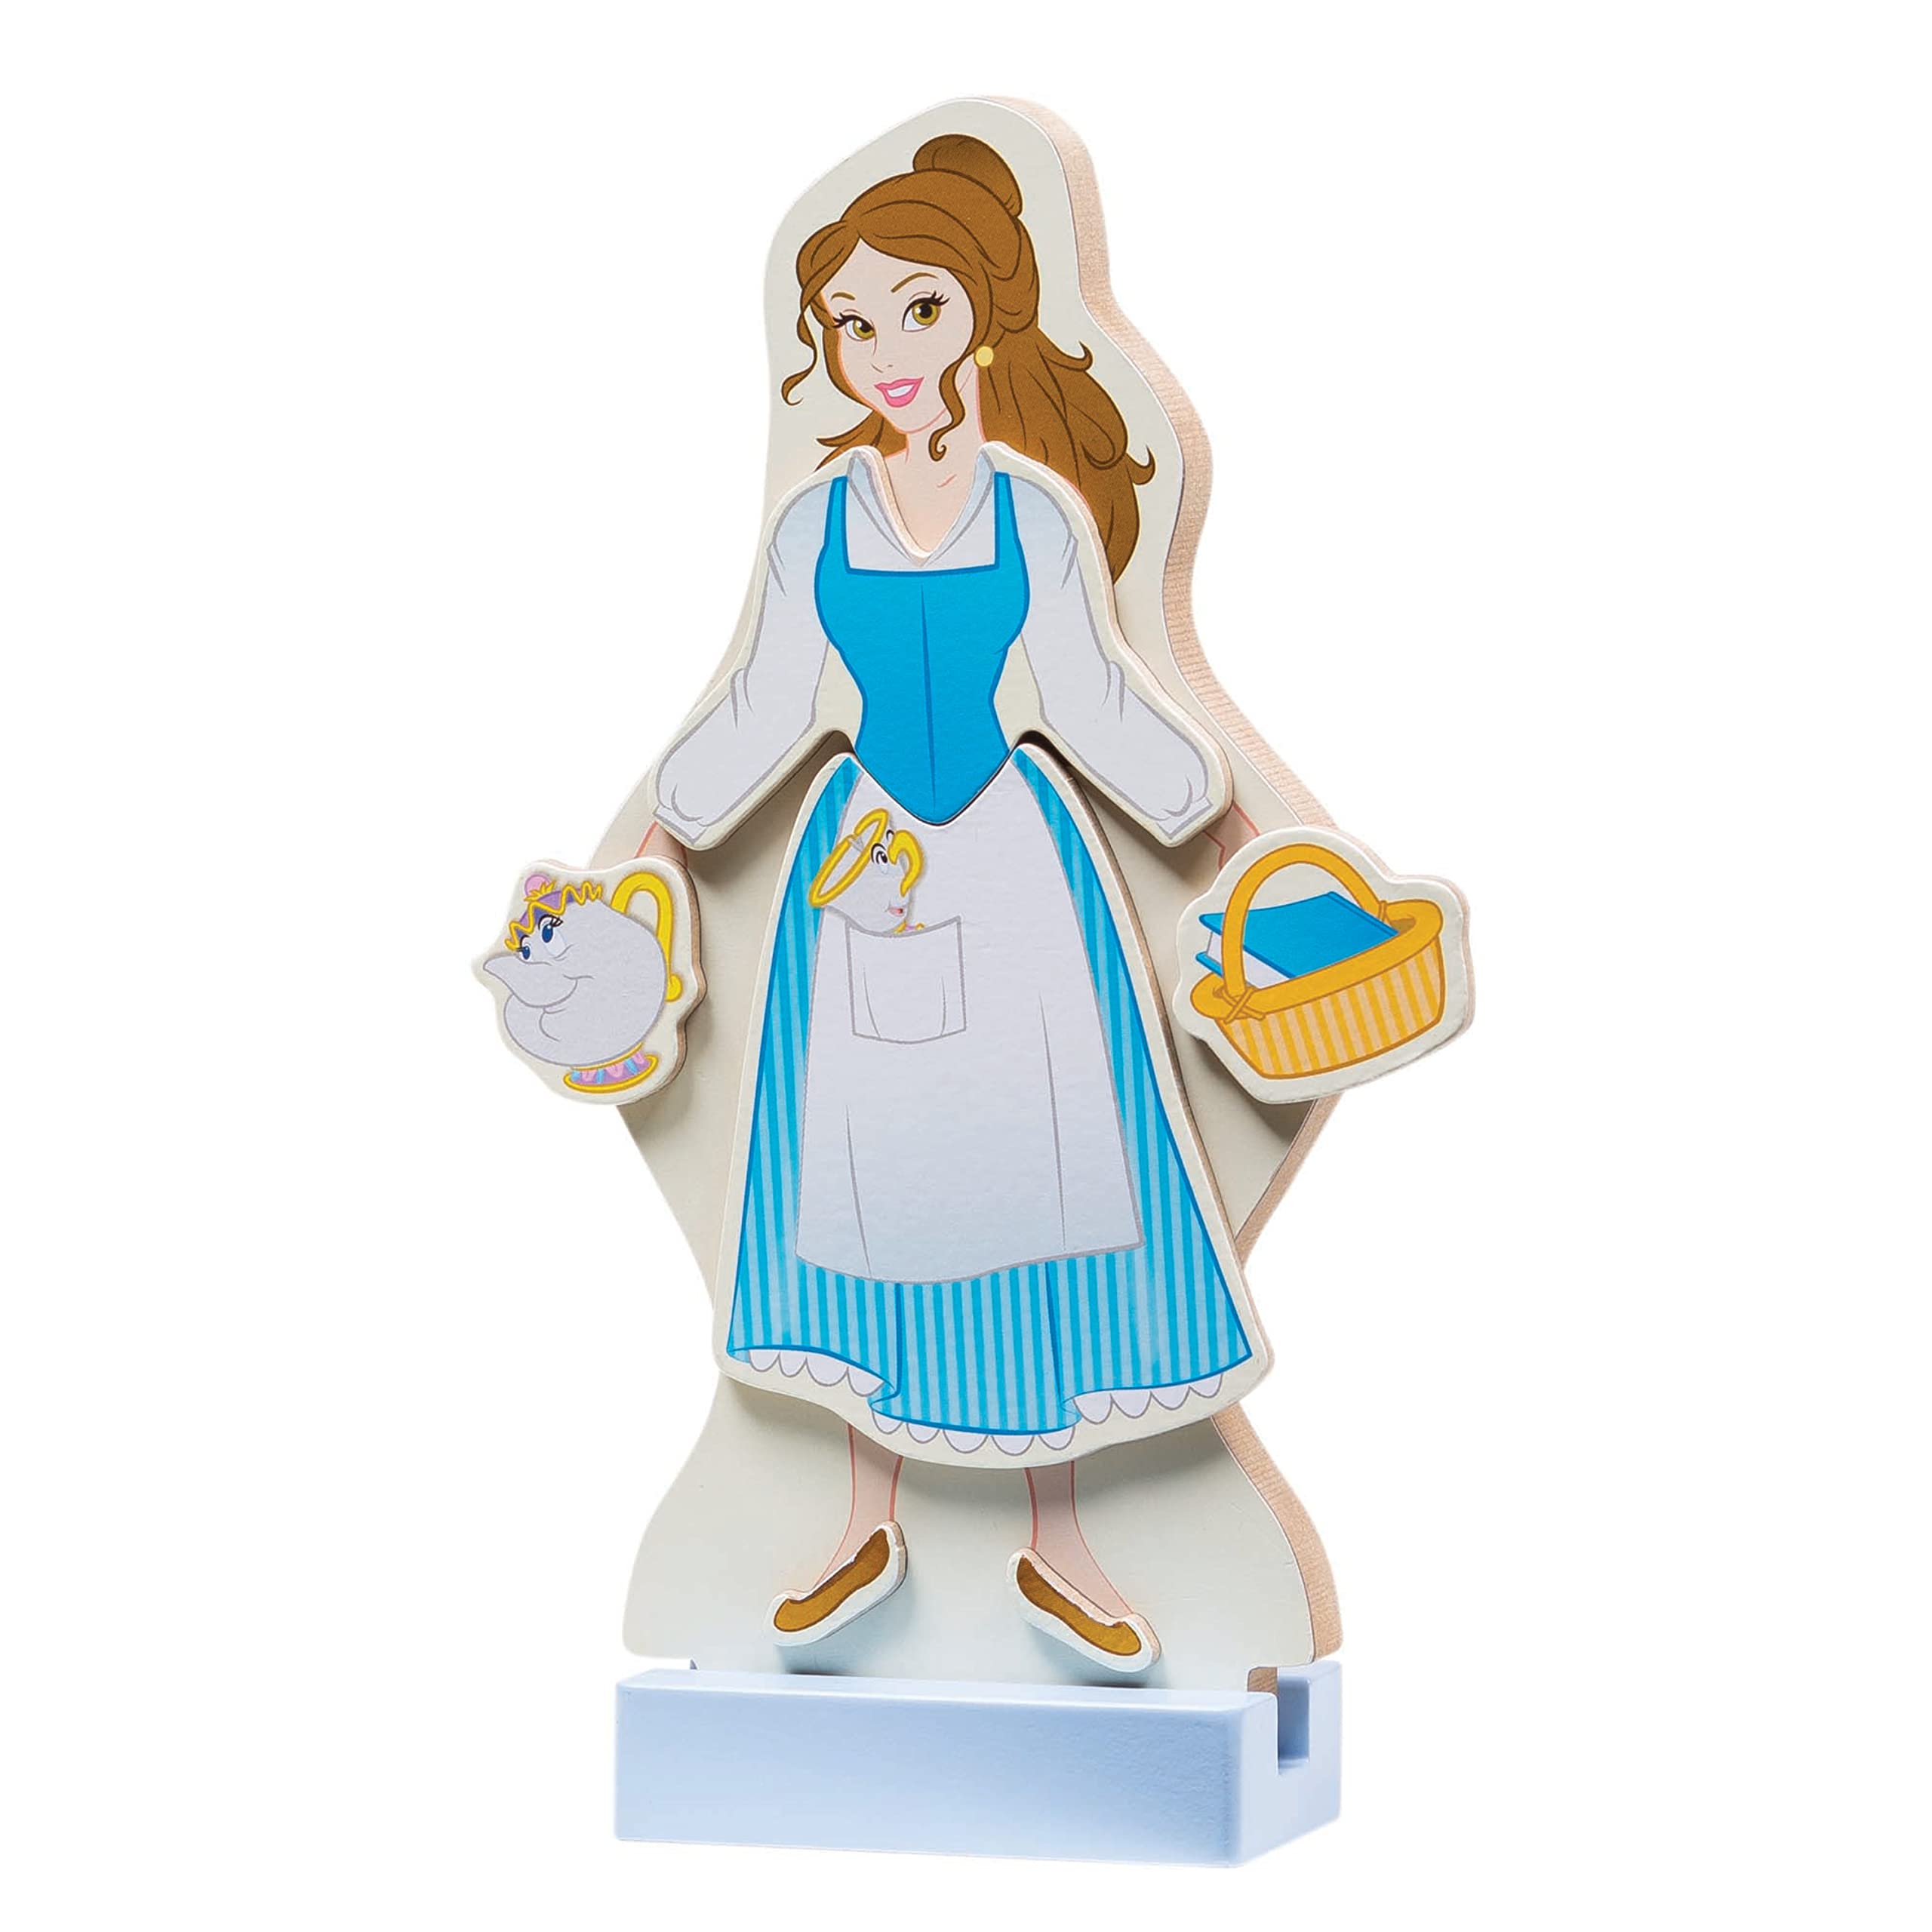 Melissa & Doug Disney Belle Magnetic Dress-Up Wooden Doll Pretend Play Set (30+ pcs)